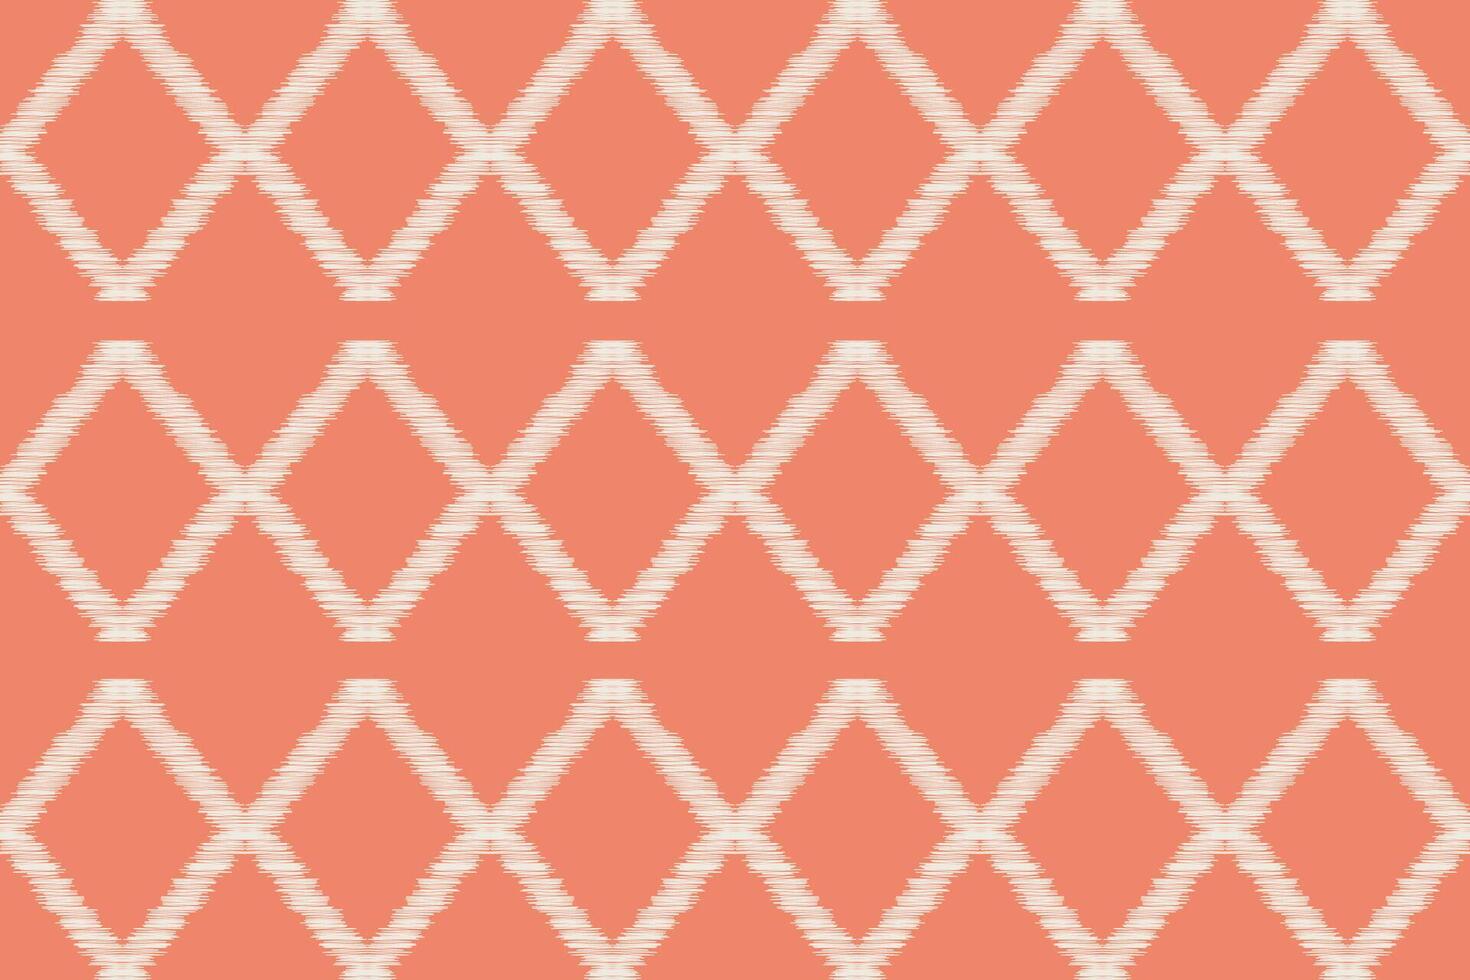 traditionell etnisk ikat motiv tyg mönster bakgrund geometrisk .ikat broderi etnisk mönster rosa pastell reste sig rosa bakgrund tapet. abstrakt, vektor, illustration.texture, ram, dekoration. vektor